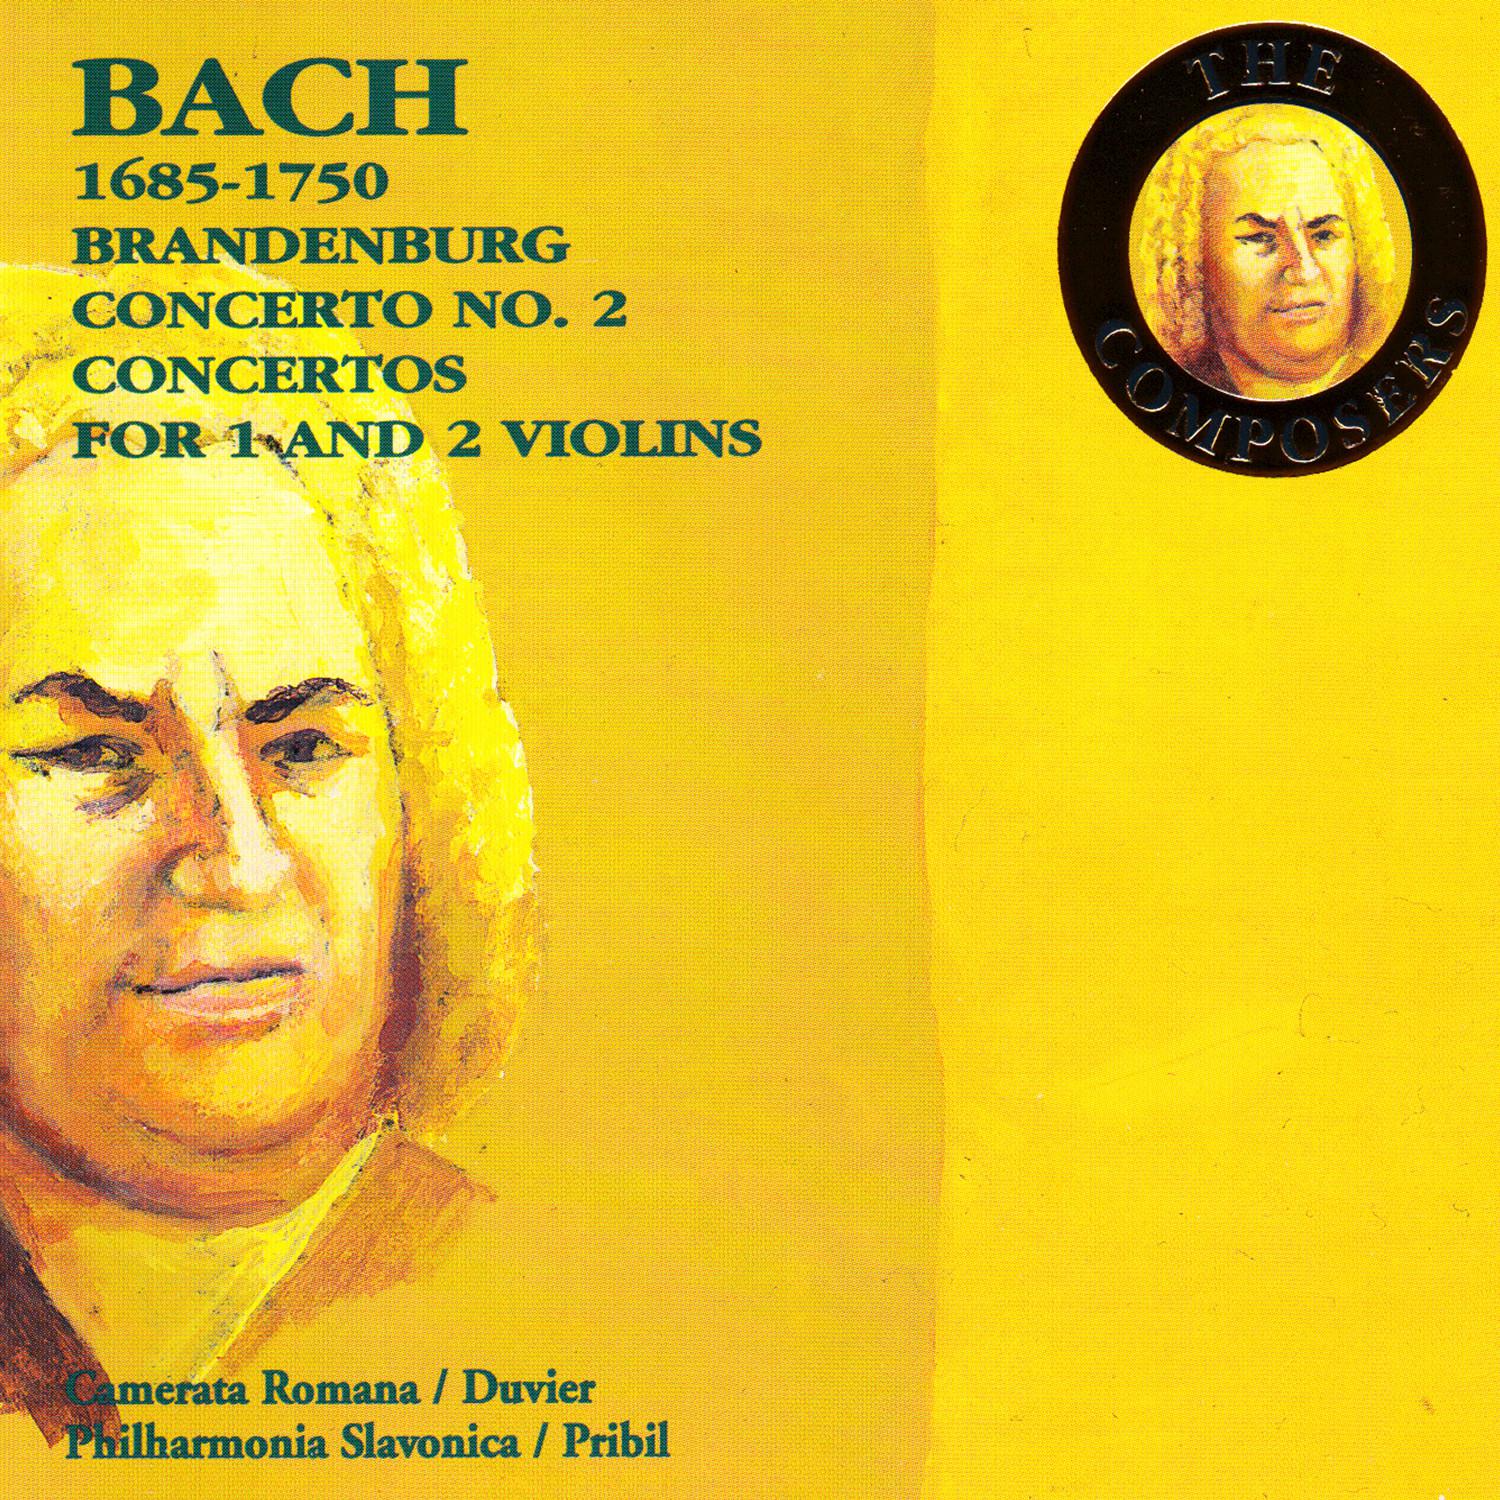 Concerto for Violin, Strings and Basso Continuo in A Minor, BWV 1041: Allegro